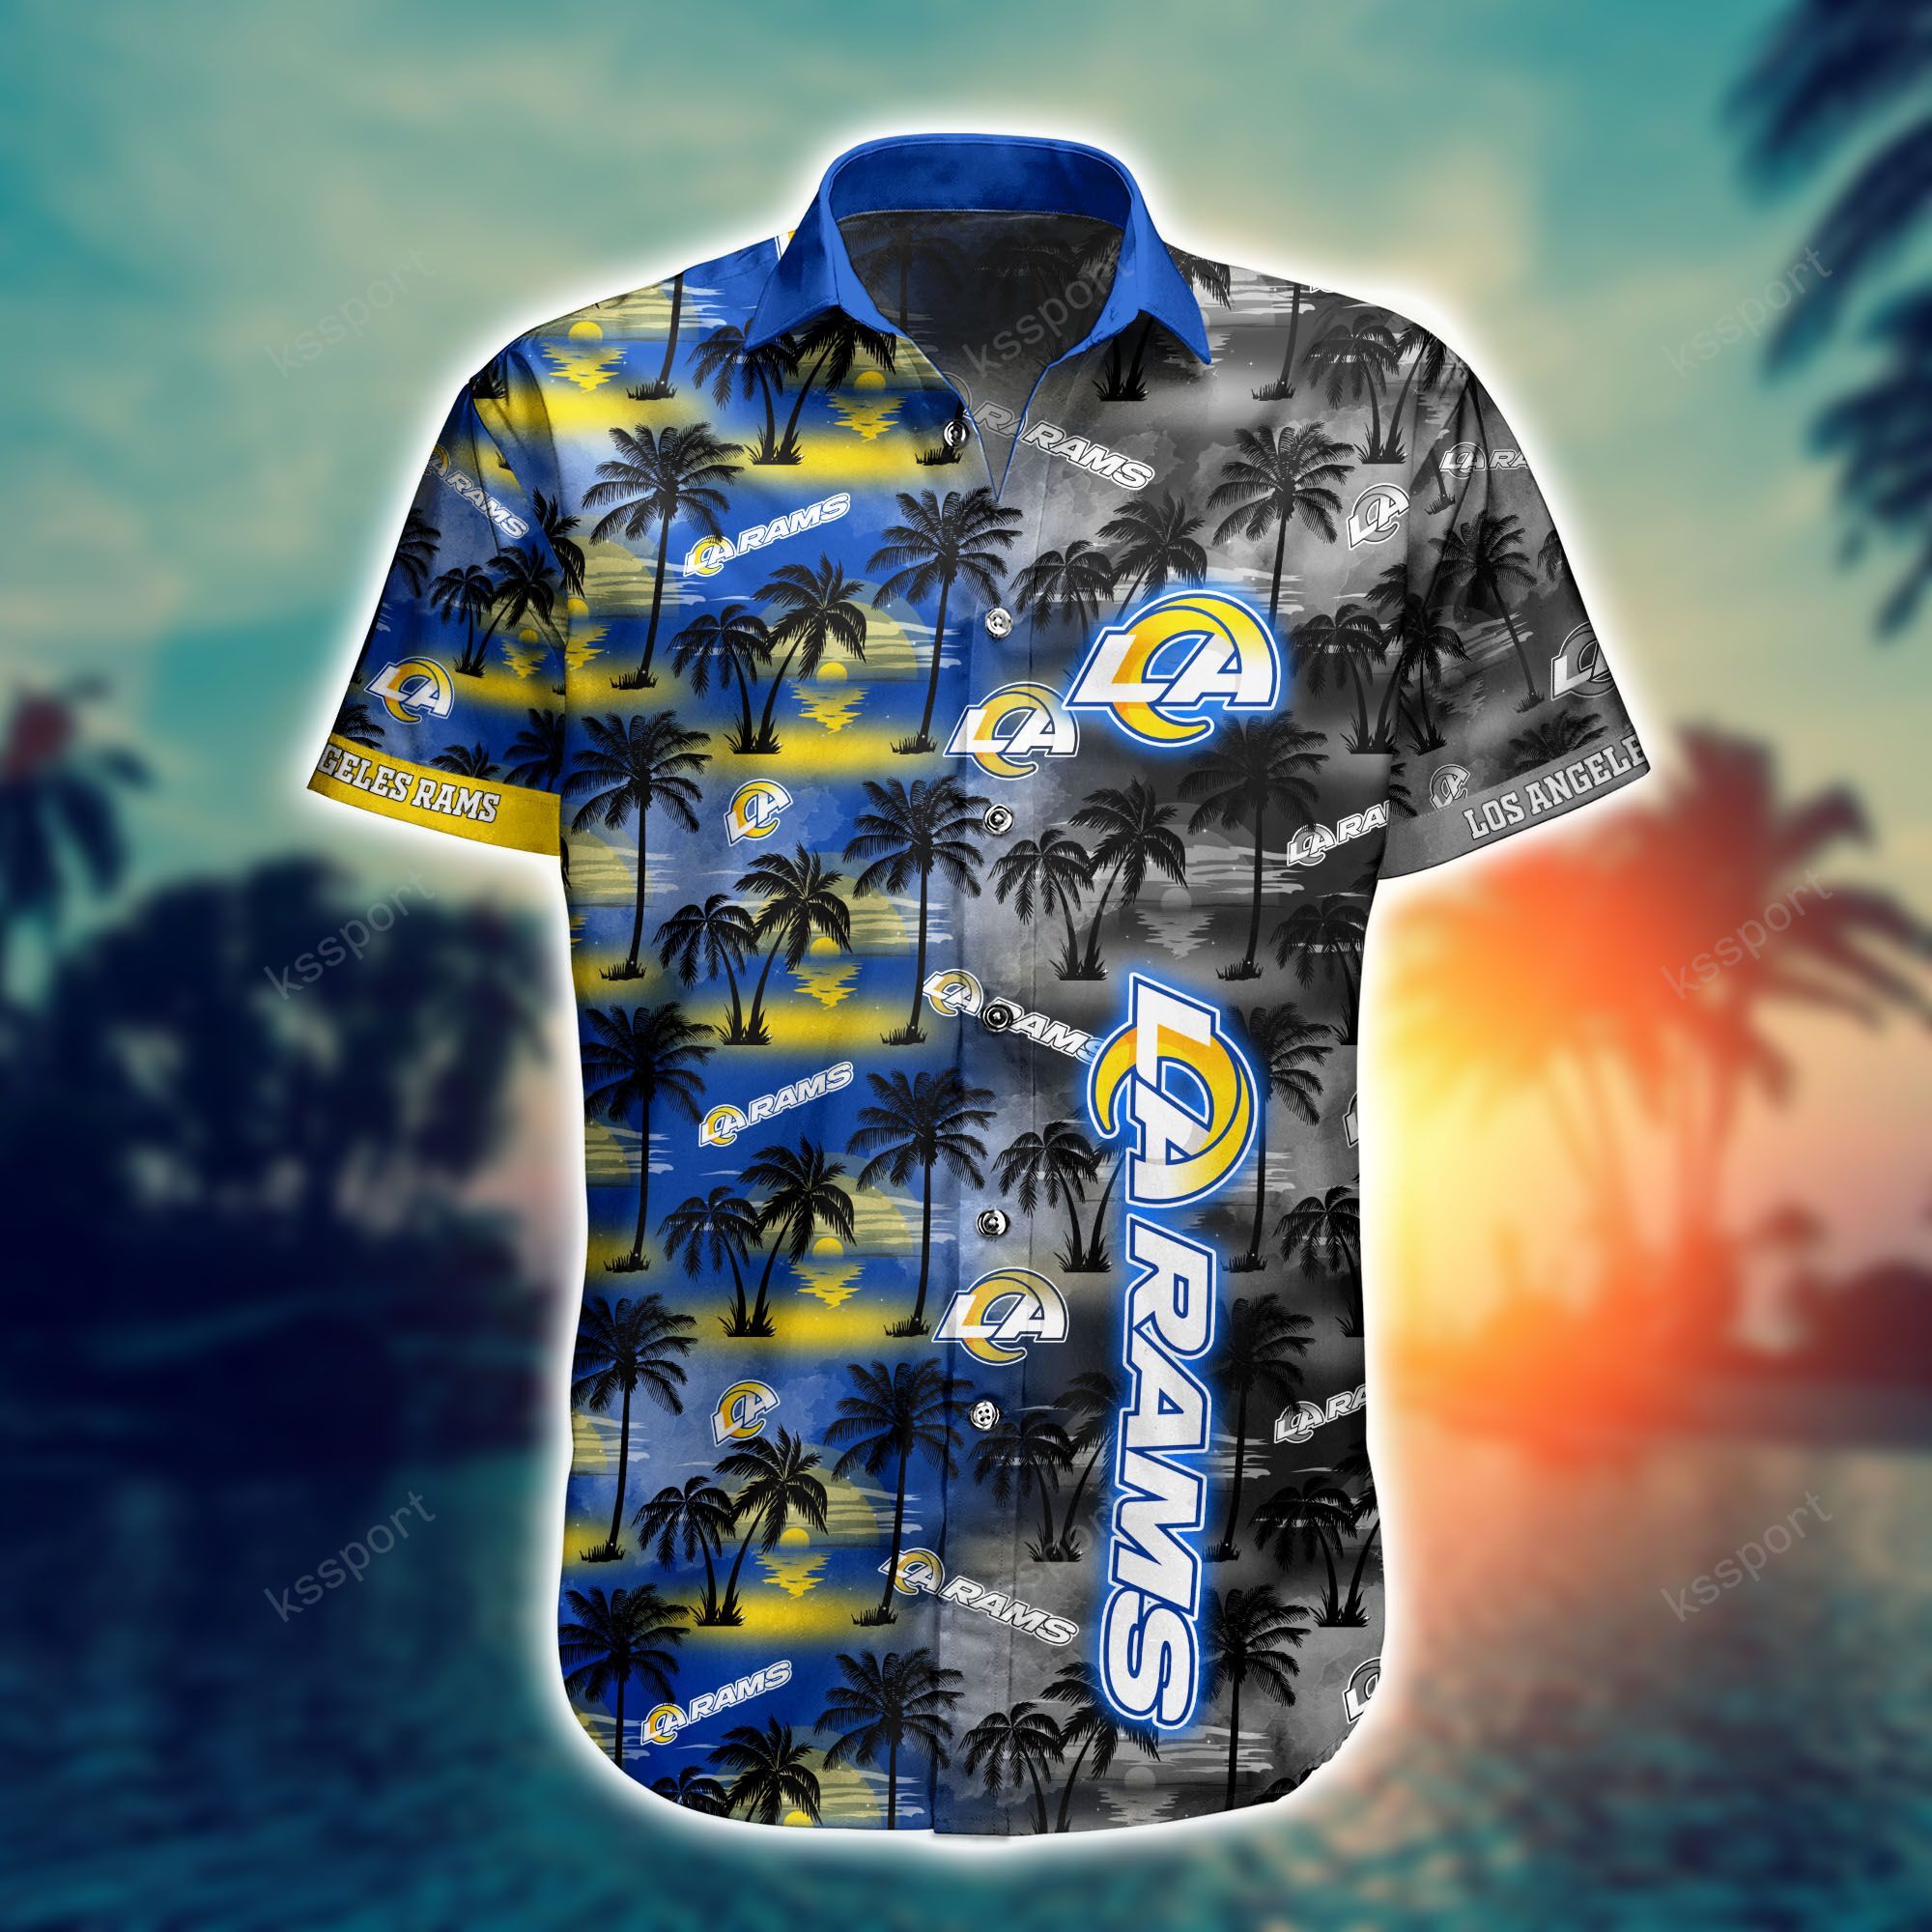 Hawaiian shirt and shorts is a great way to look stylish at a beach party 28